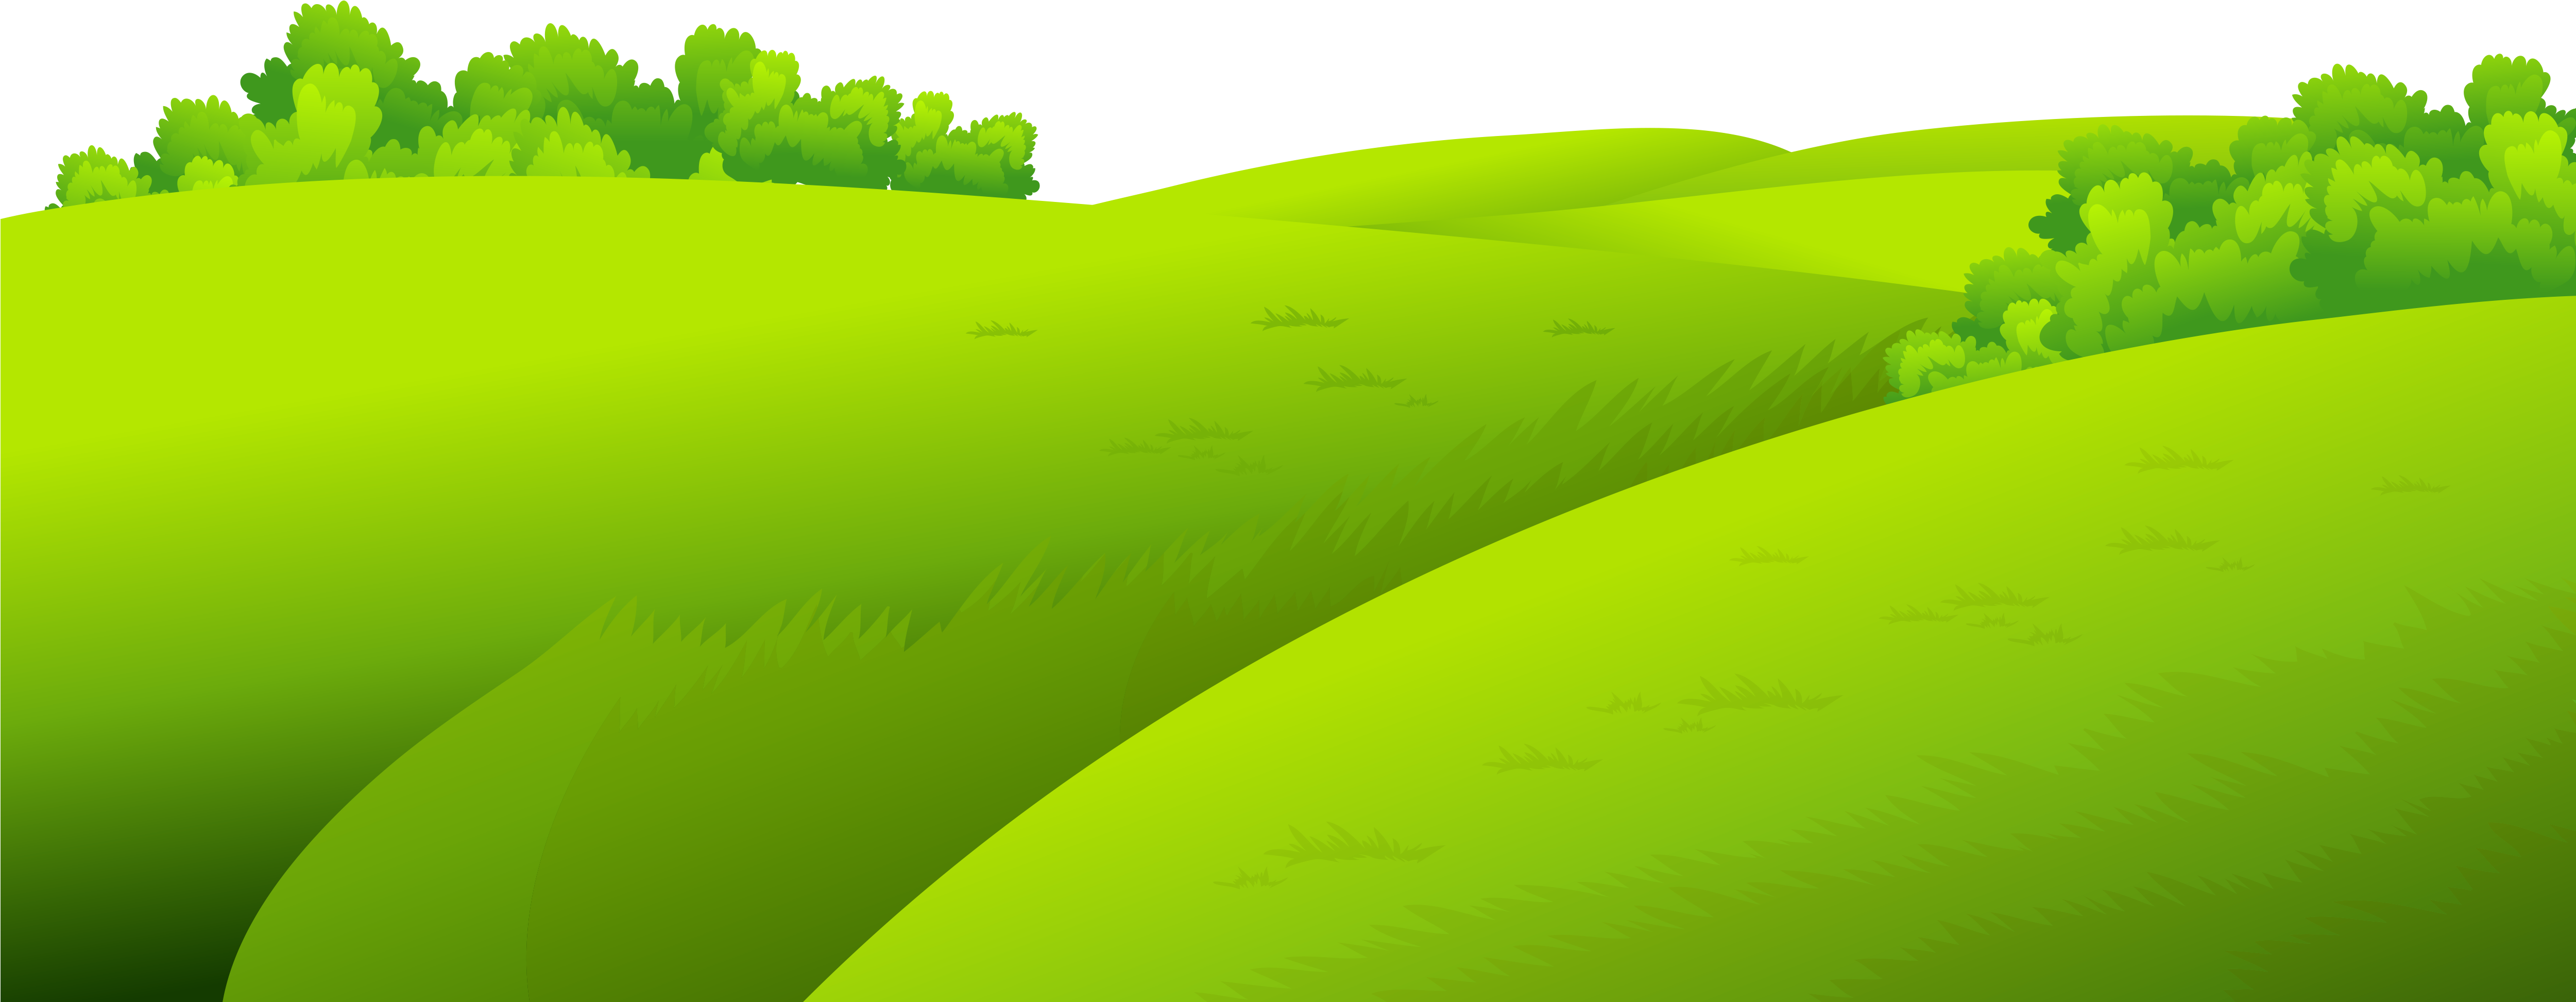 Field Grass Landscape Free Download Image PNG Image